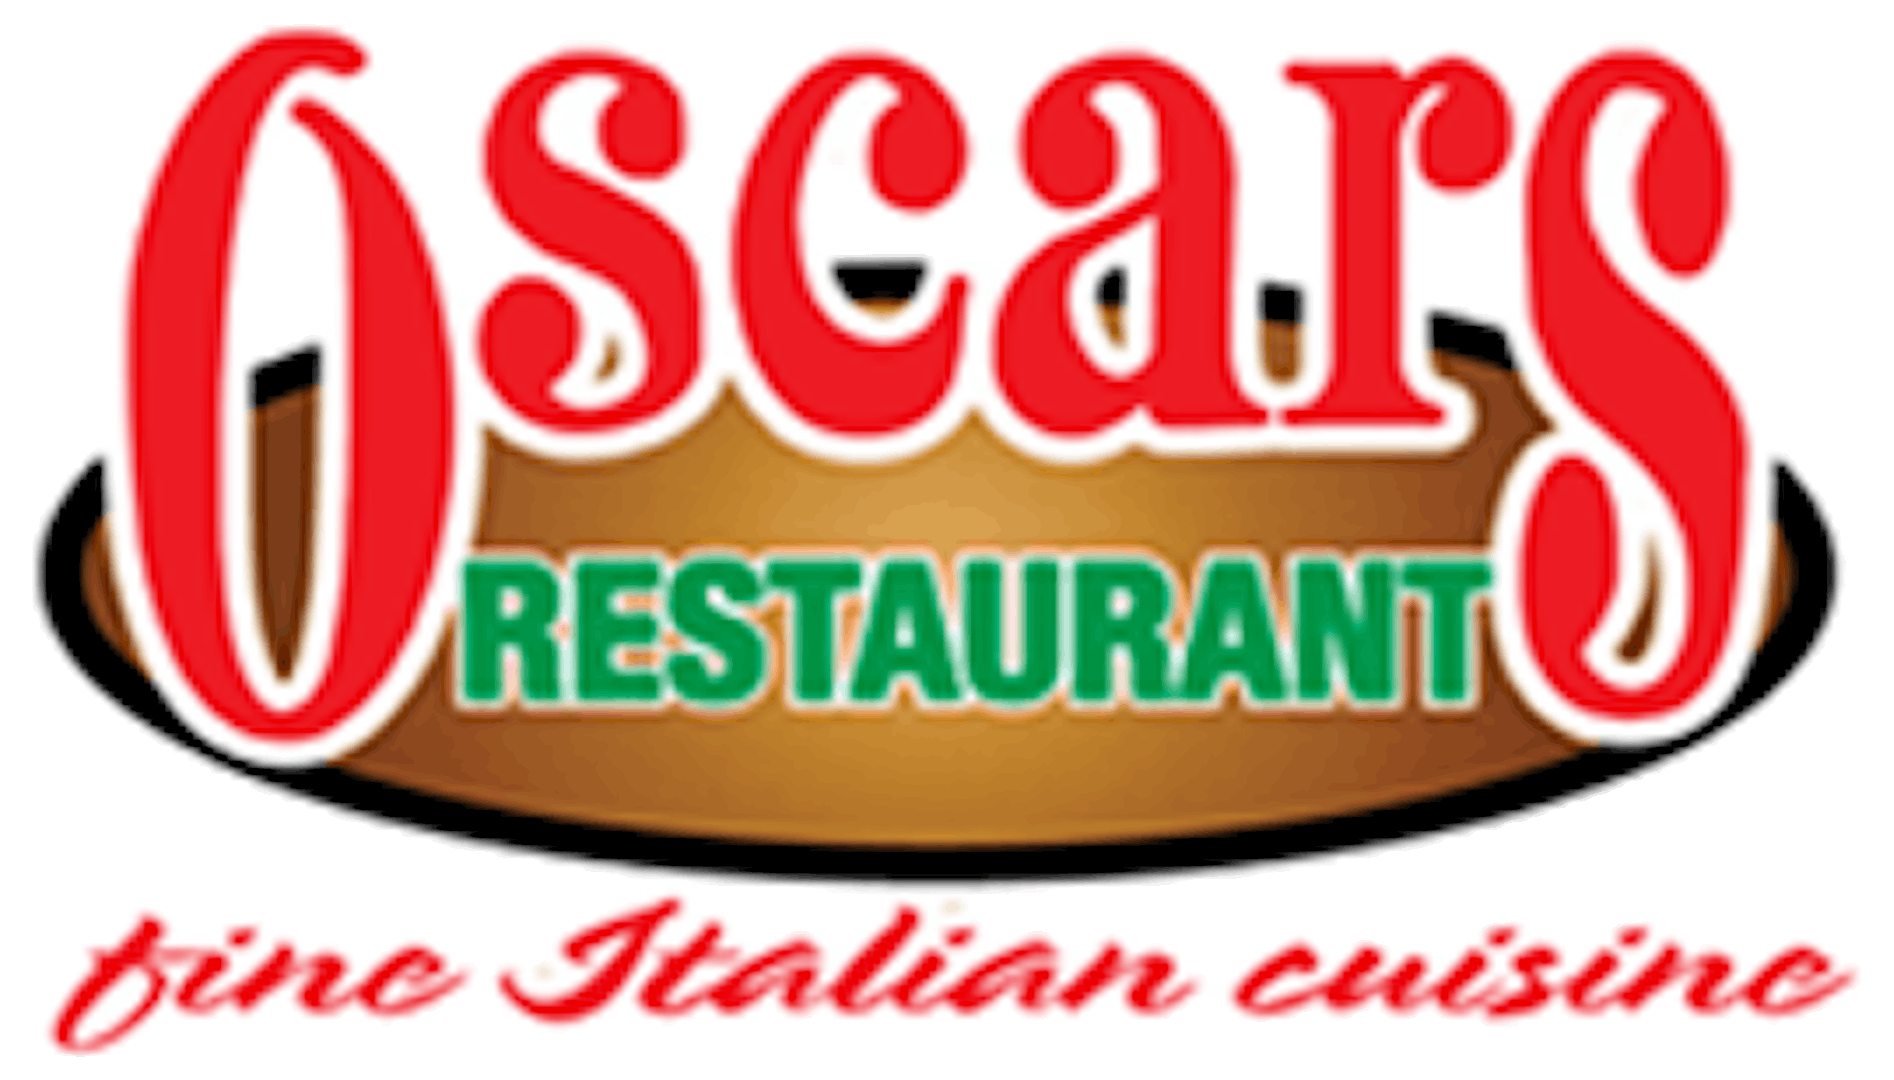 Oscar S Restaurant Knoxville Tn 37916 Menu Order Online